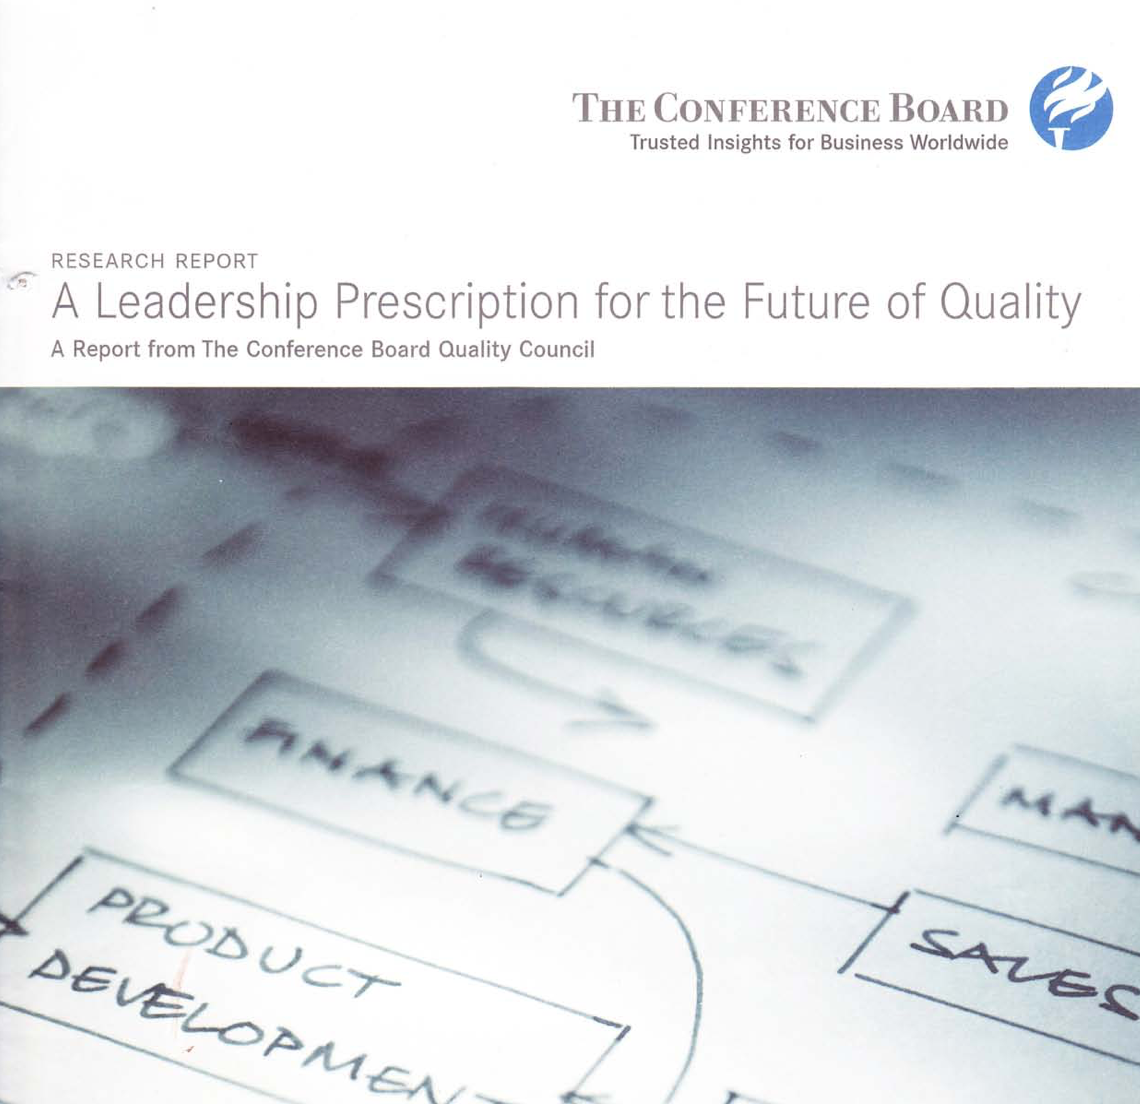 A leadership prescription for the future of quality